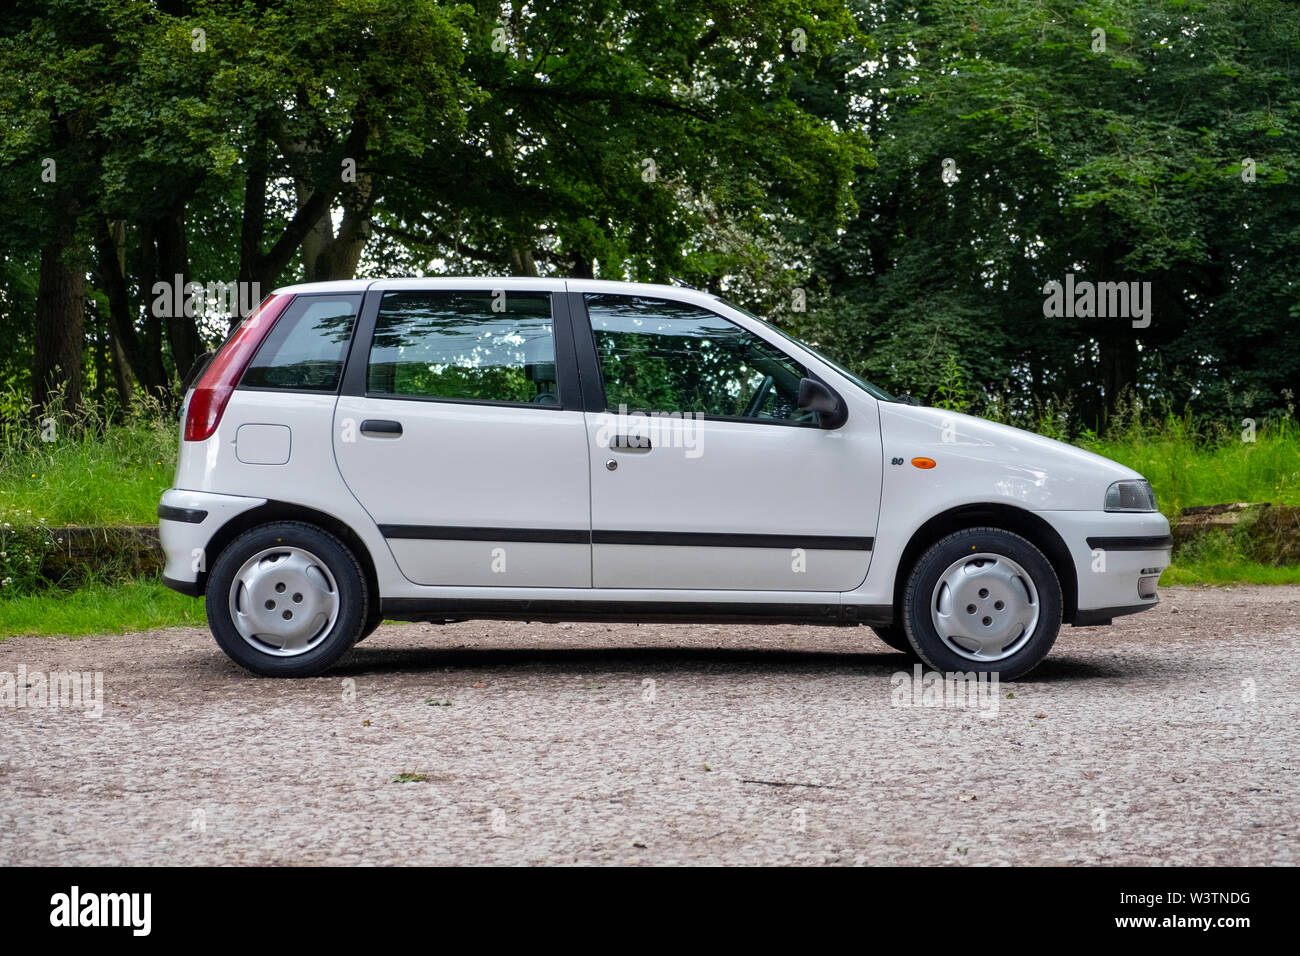 1996 Fiat Punto 90 ELX 1.6 5 door Italian compact car Stock Photo - Alamy